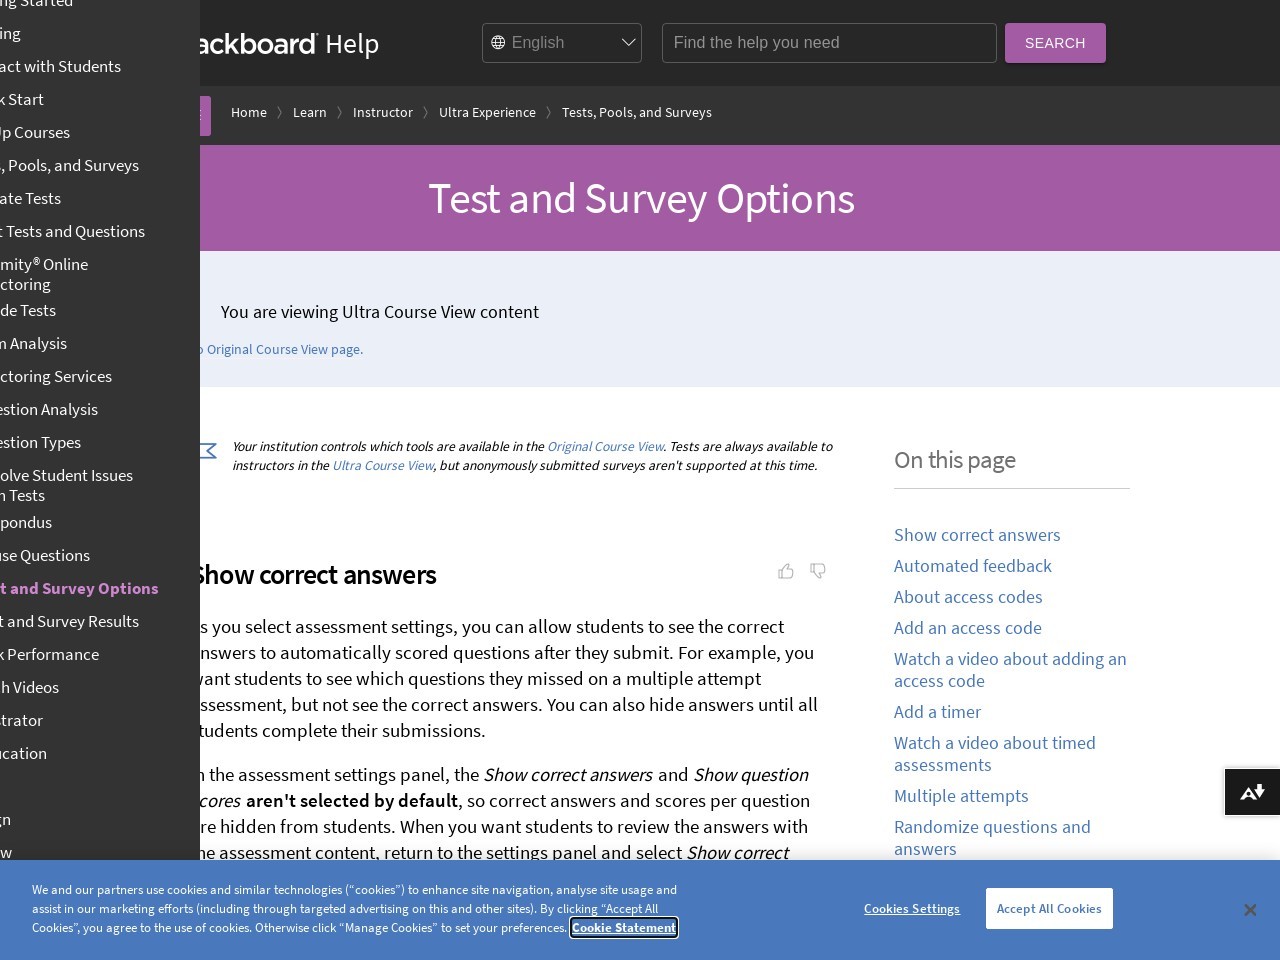 Test and Survey Options | Blackboard Help